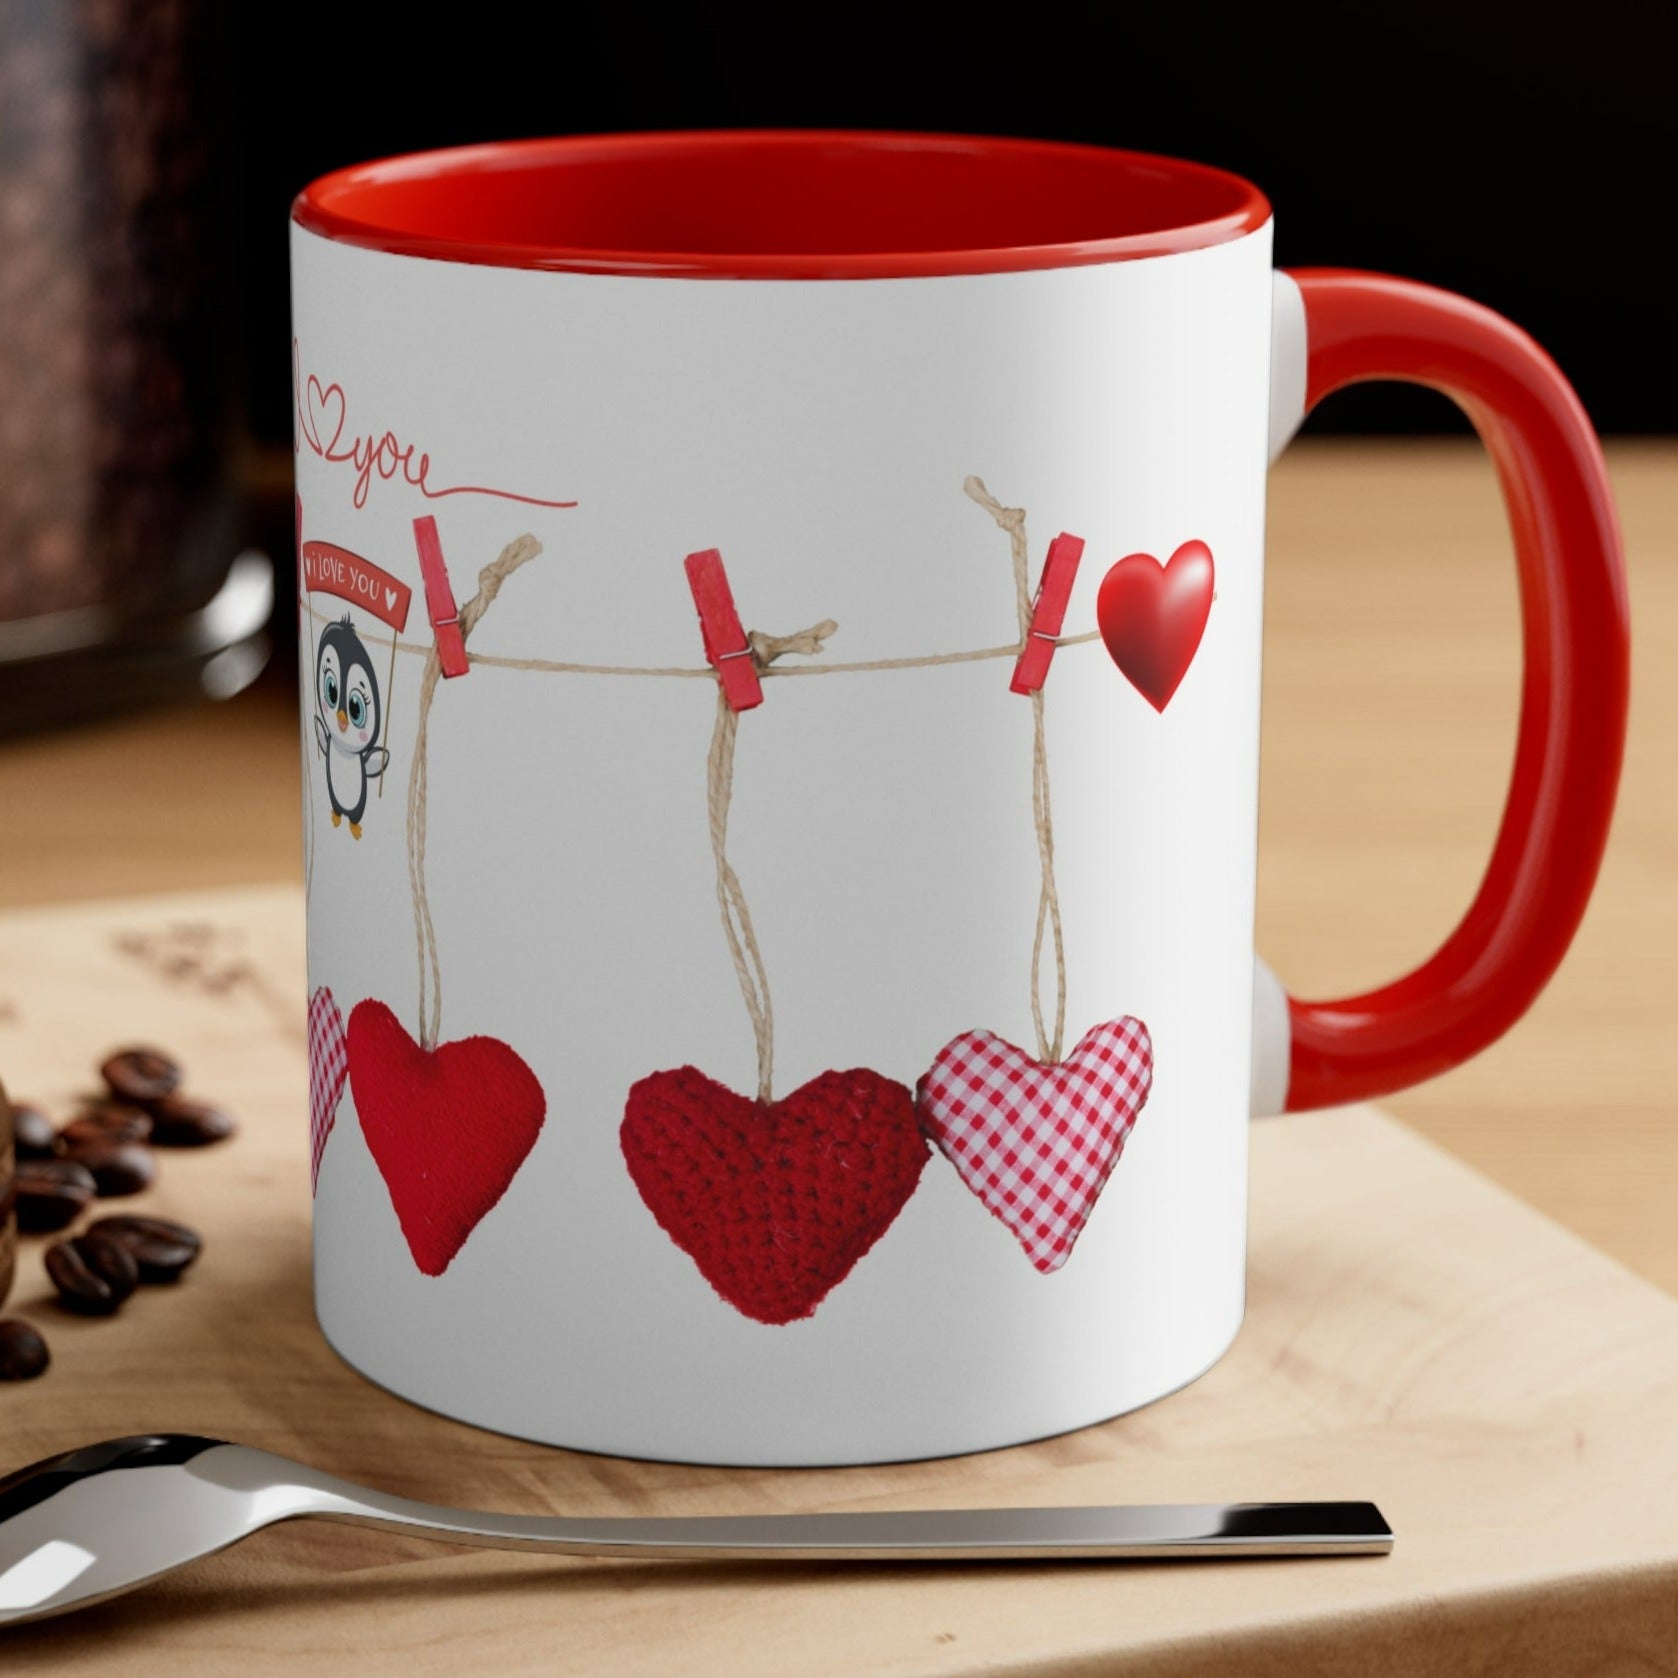 I love you more, I love you most cute couple mug SET, Anniversary gift –  The Artsy Spot